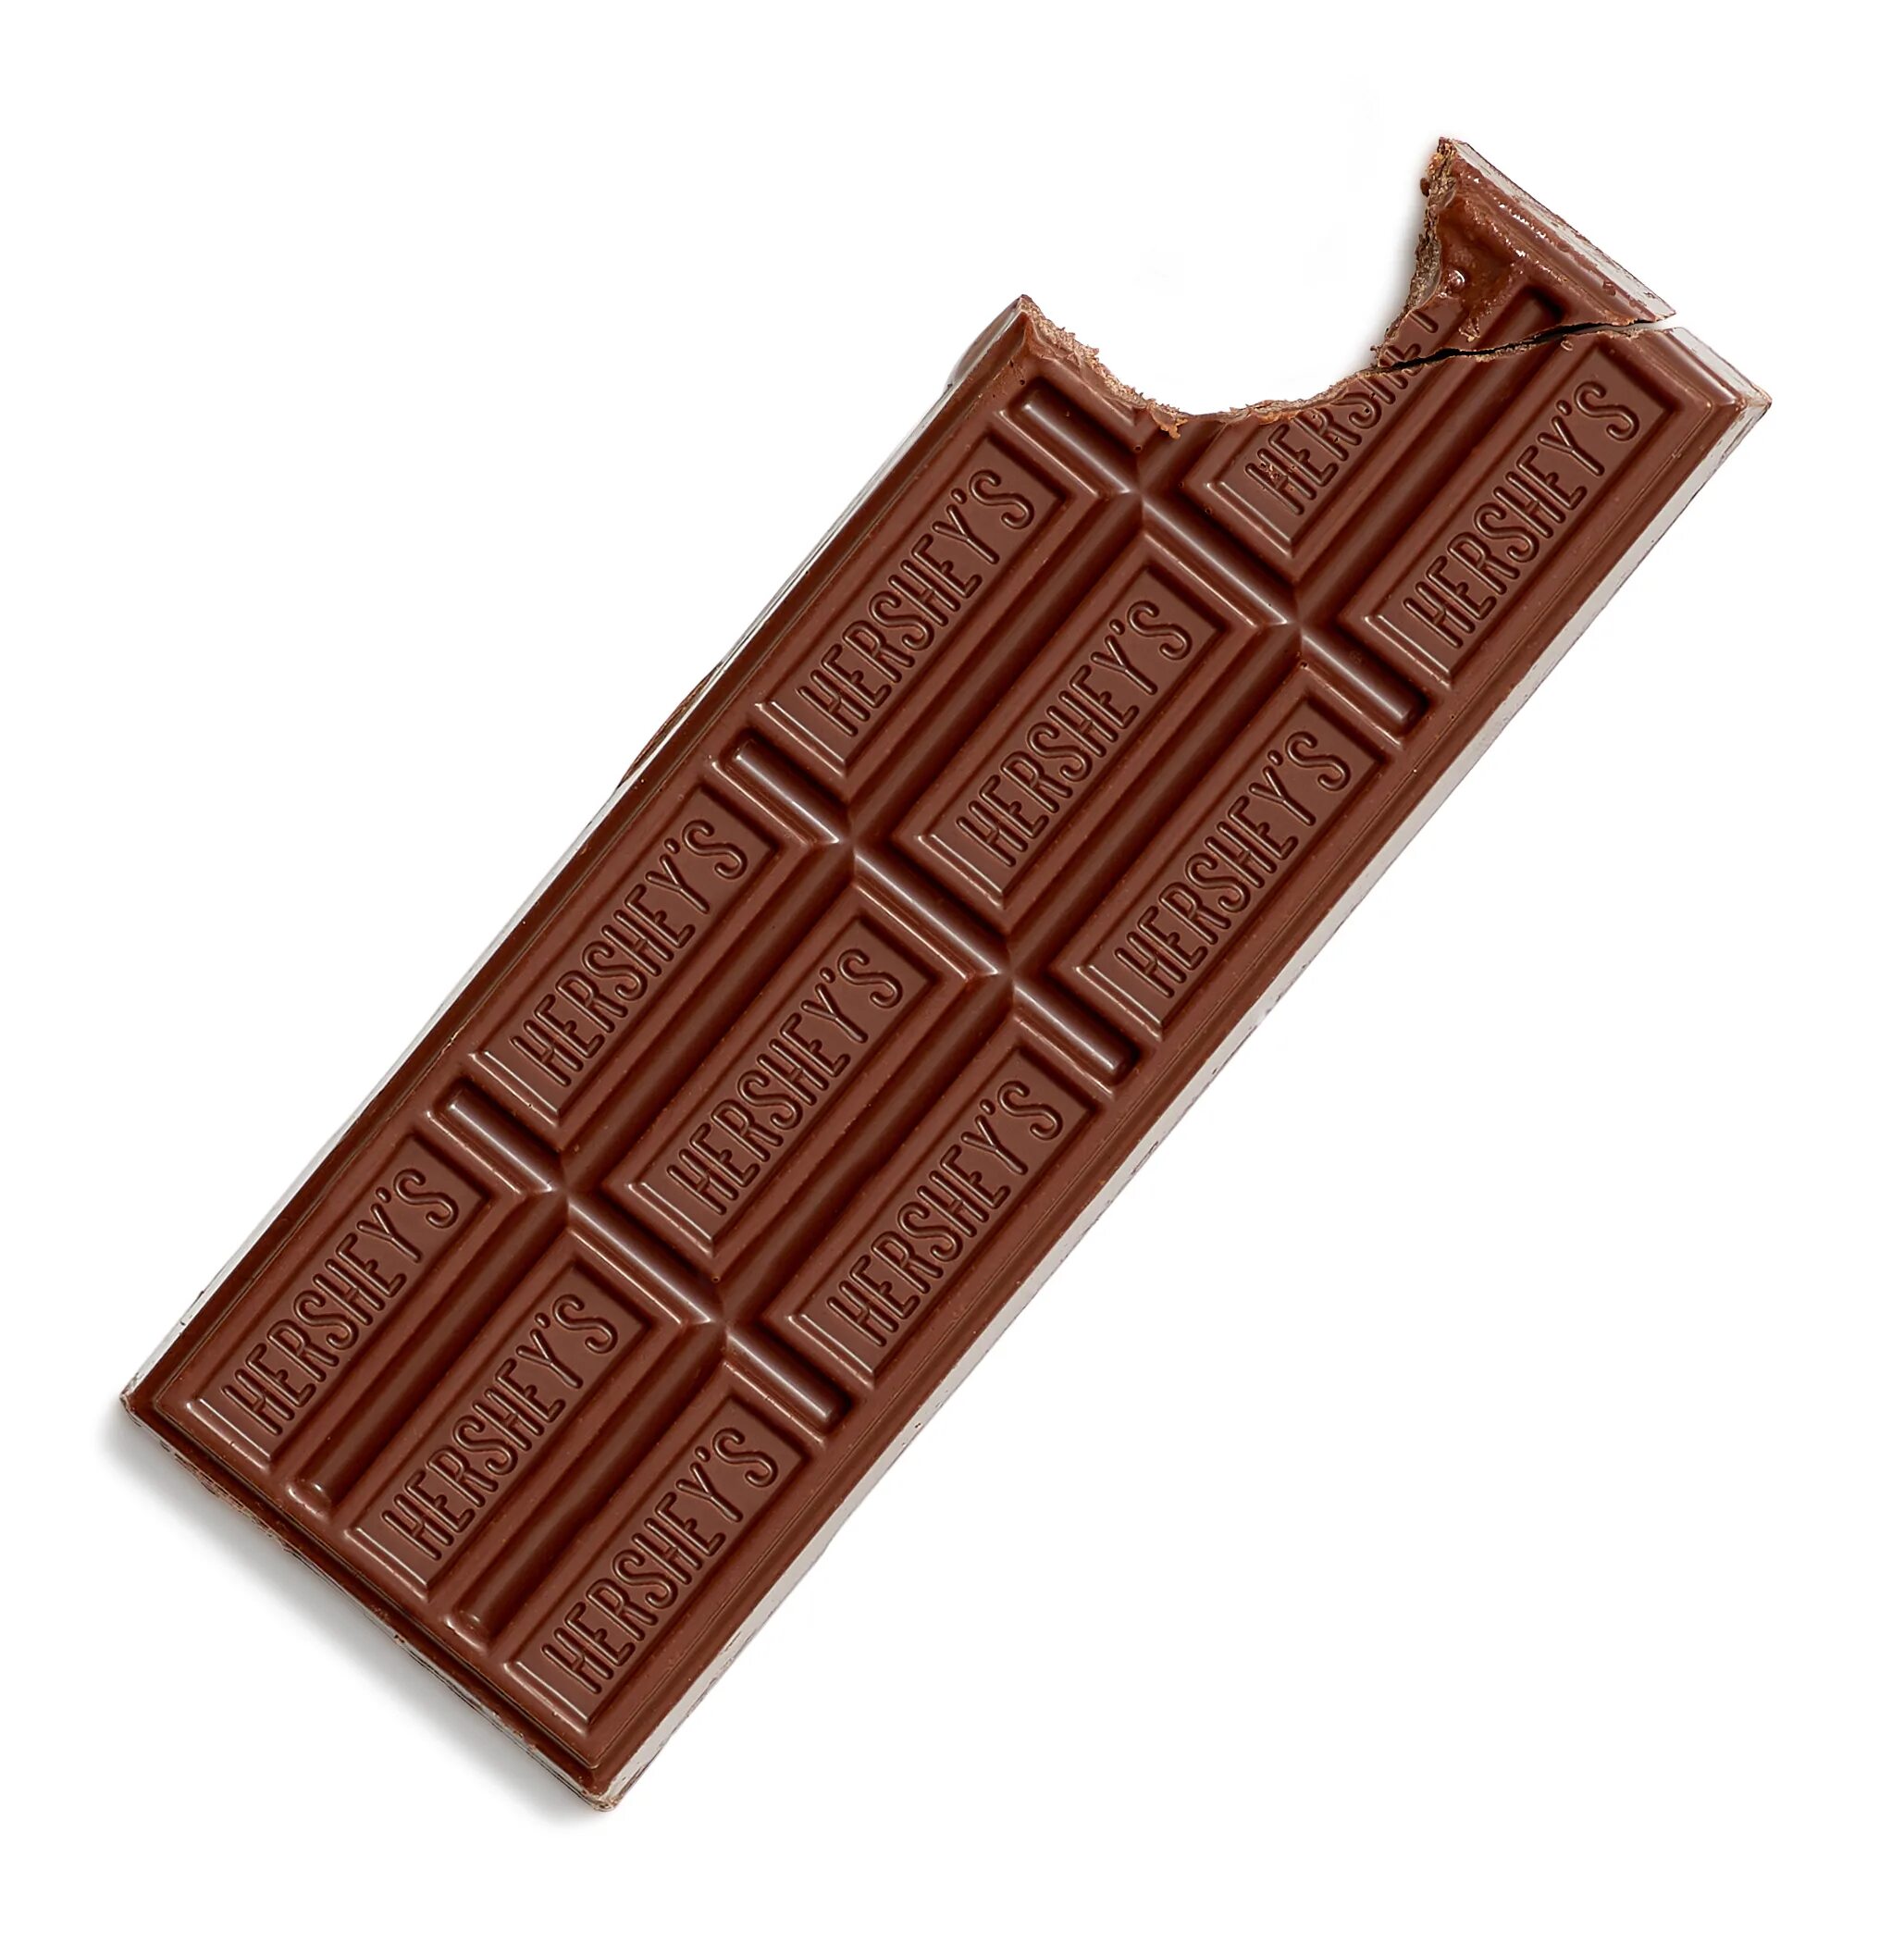 Bar of chocolate. Chocolate Bar. Chocolate Bar Candy. A Bar of Chocolate картинка для детей. Arabic Chocolate Bar.